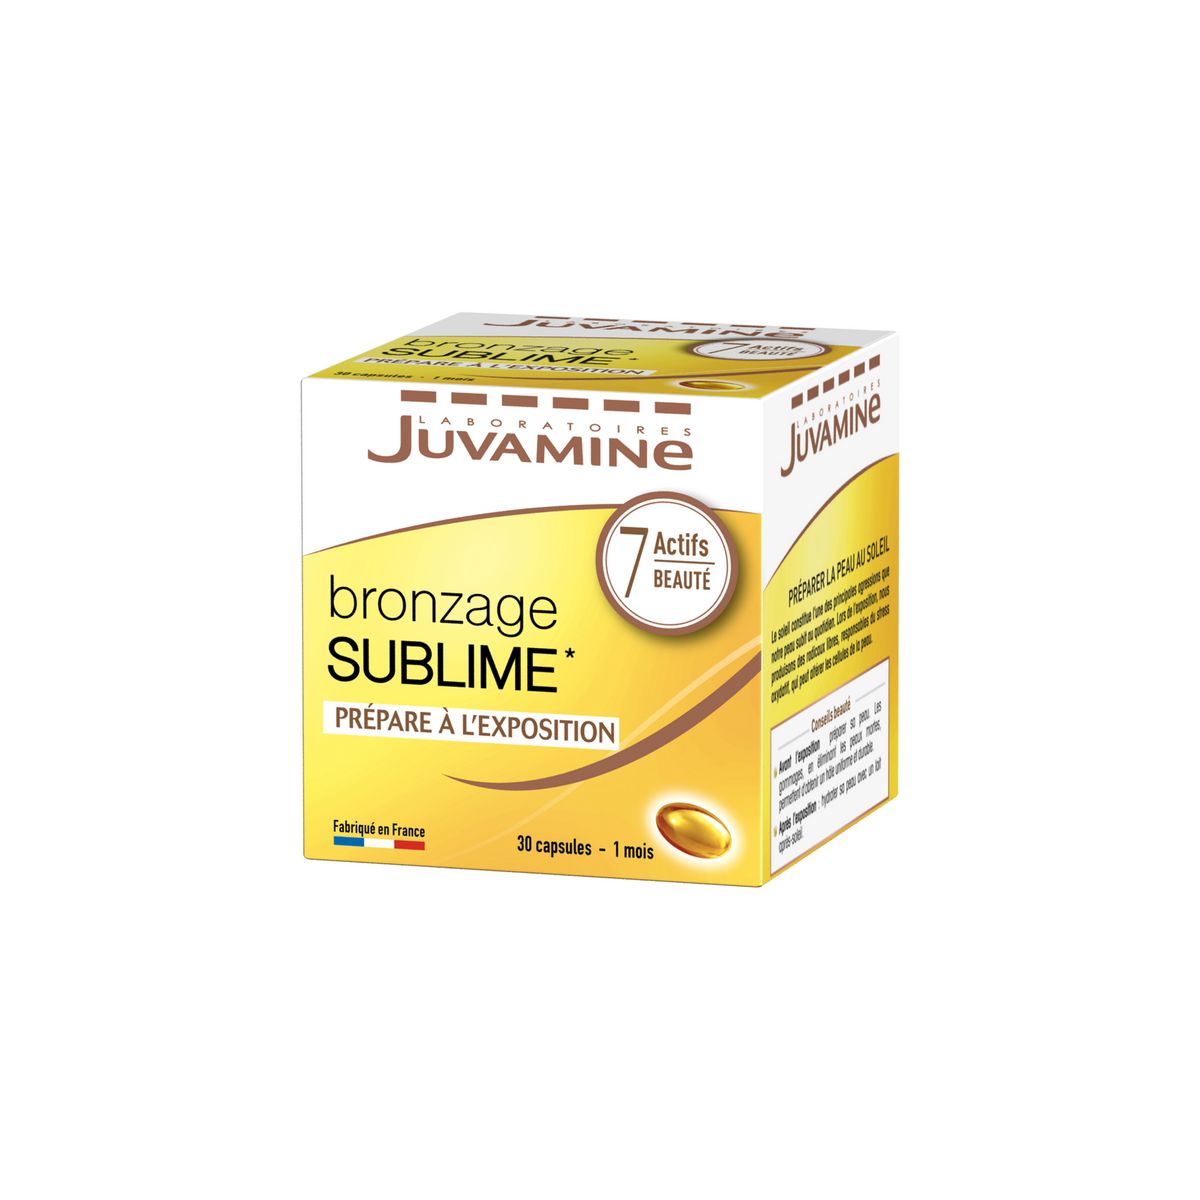 JUVAMINE Bronzage sublime 30 capsules 30g